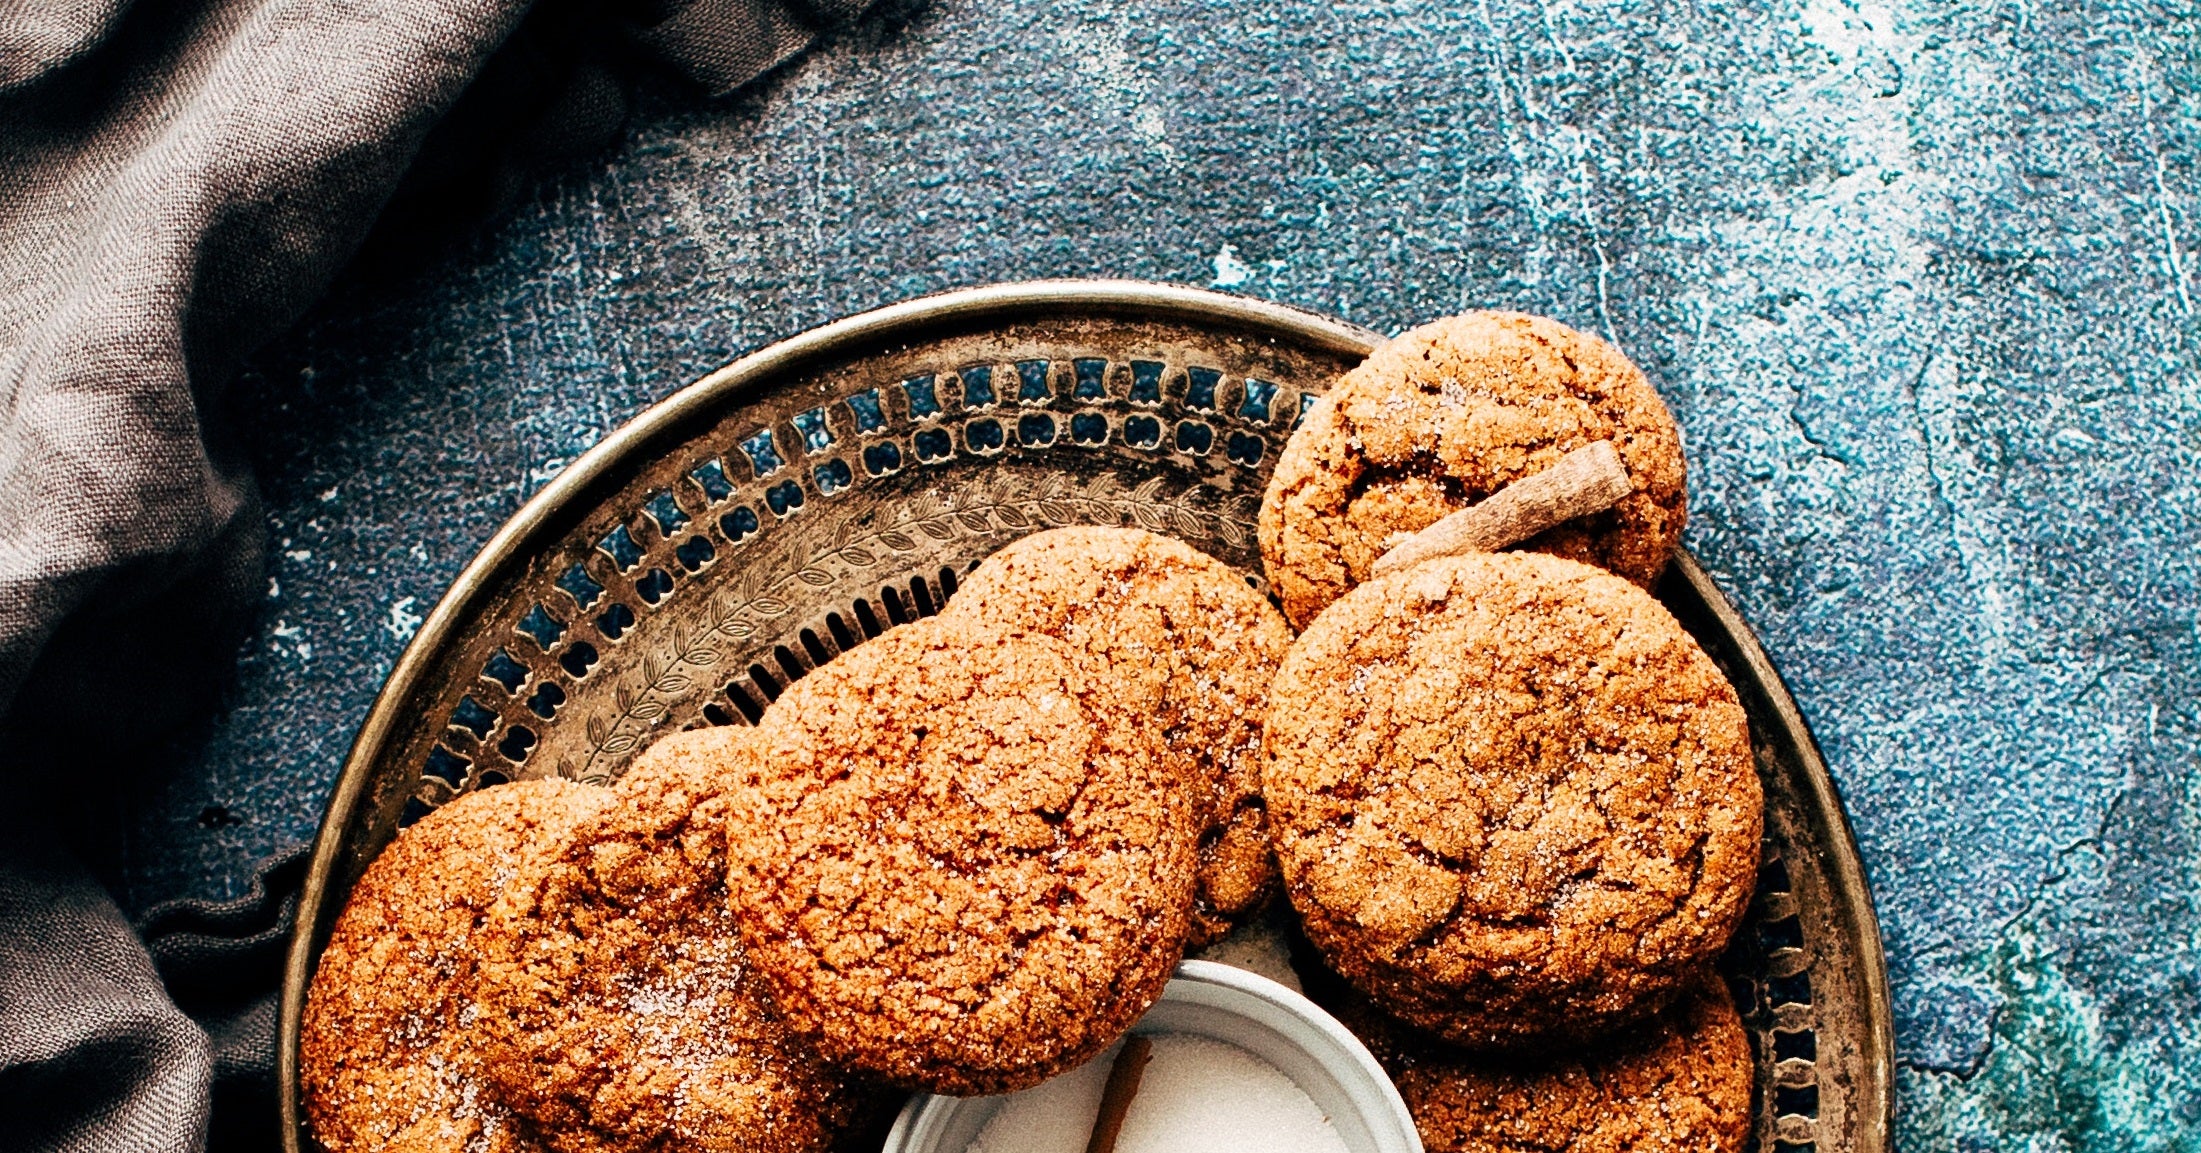 ginger-biscuits.jpg